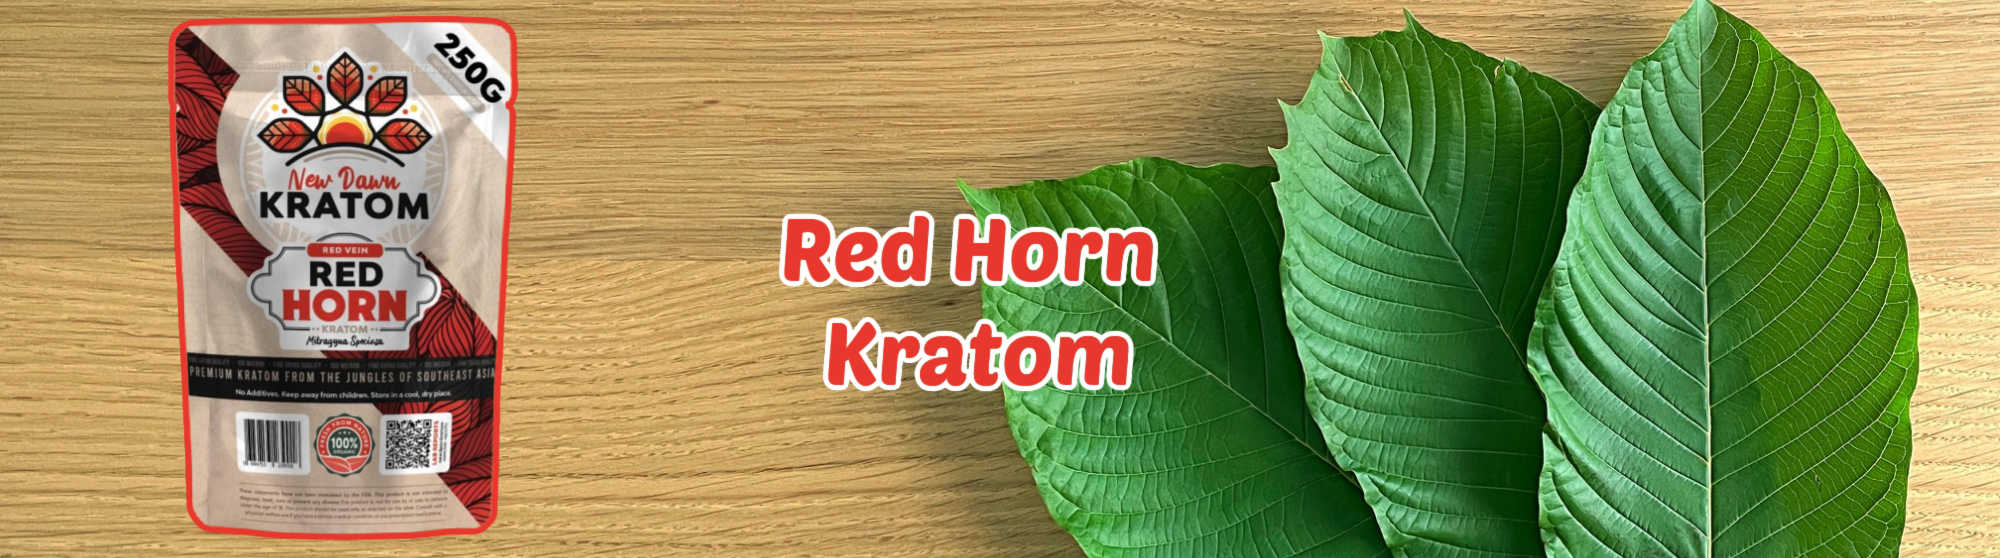 image of red horn kratom for relaxation